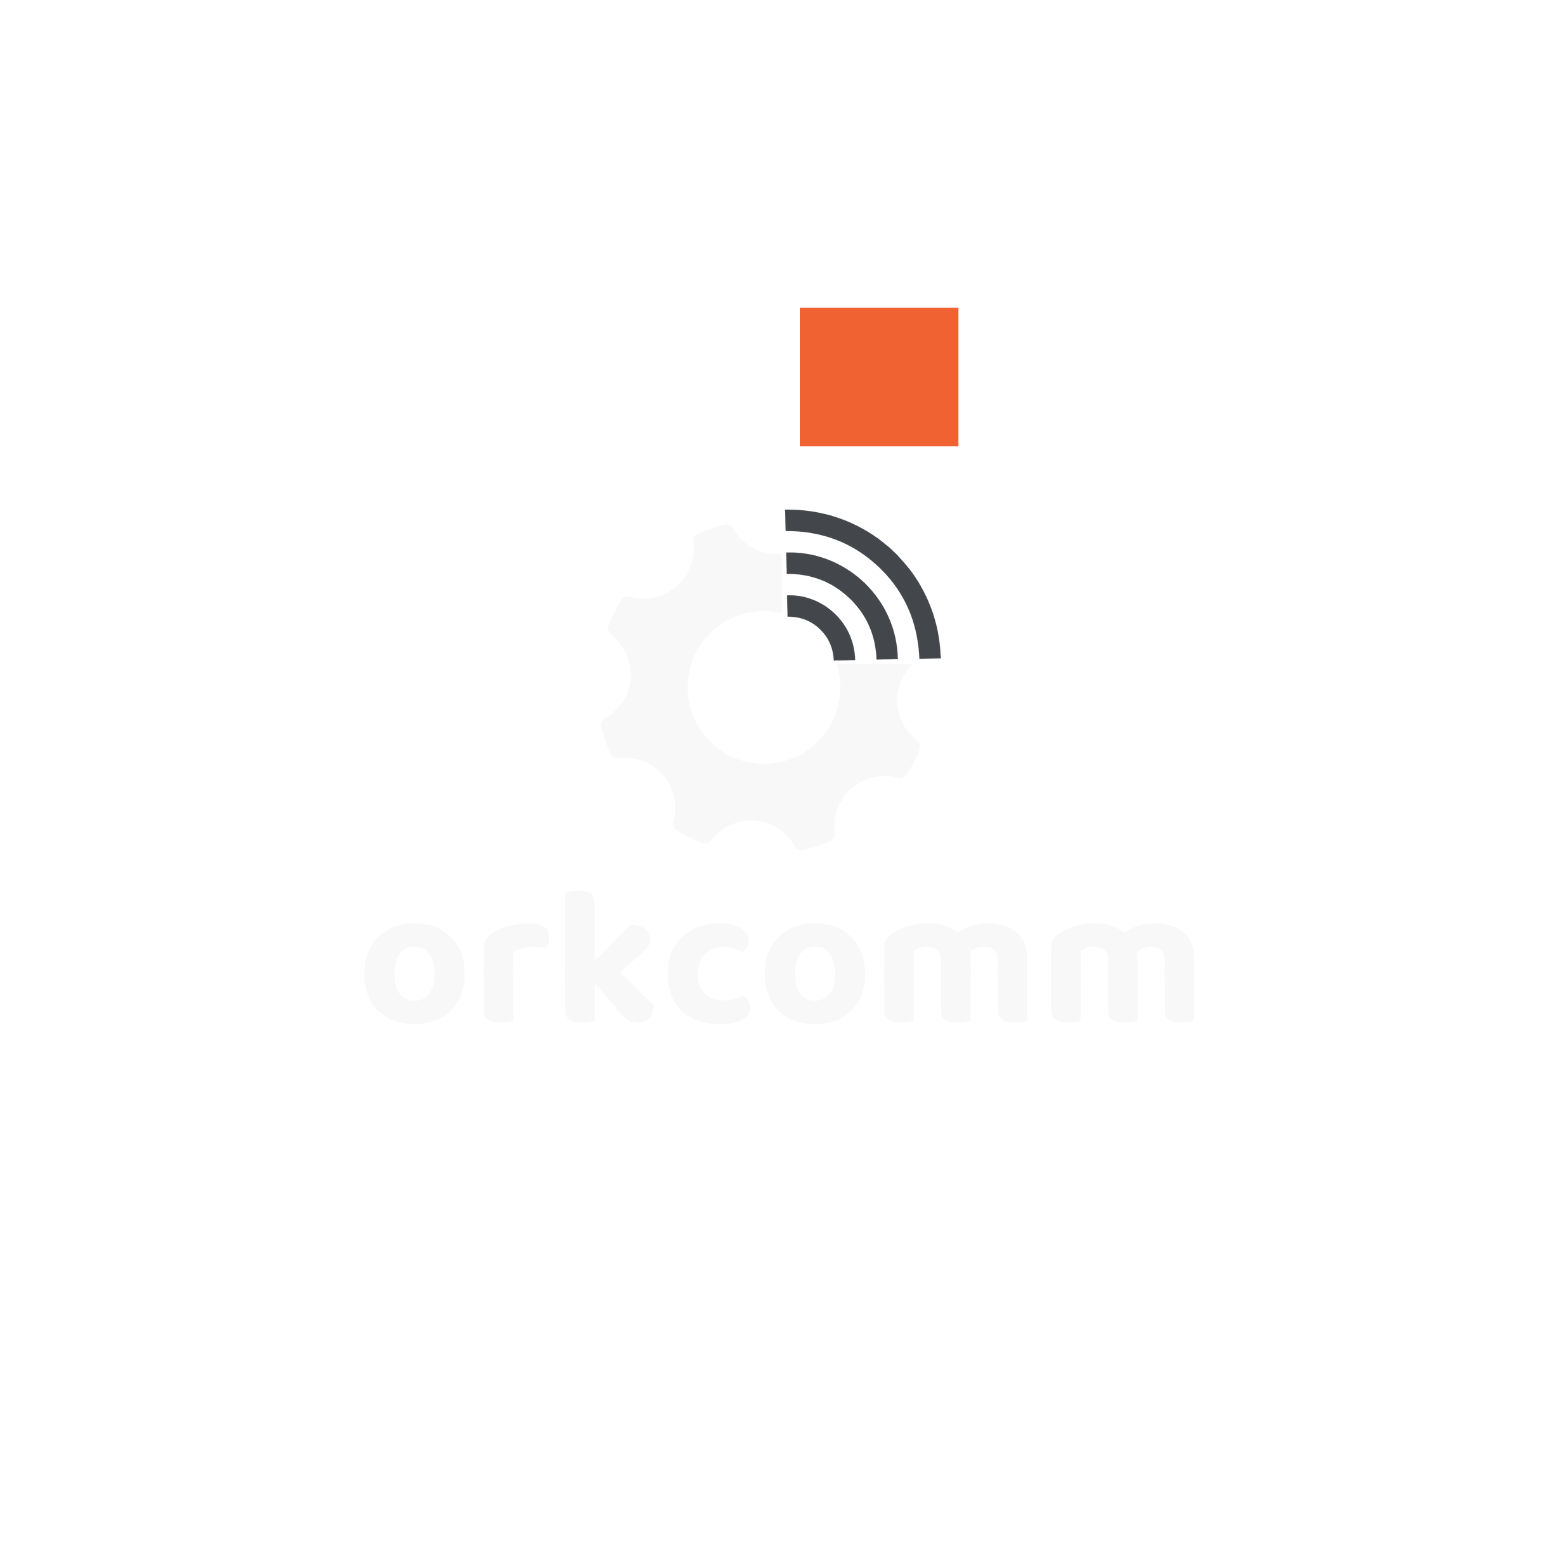 Orkcomm Logo